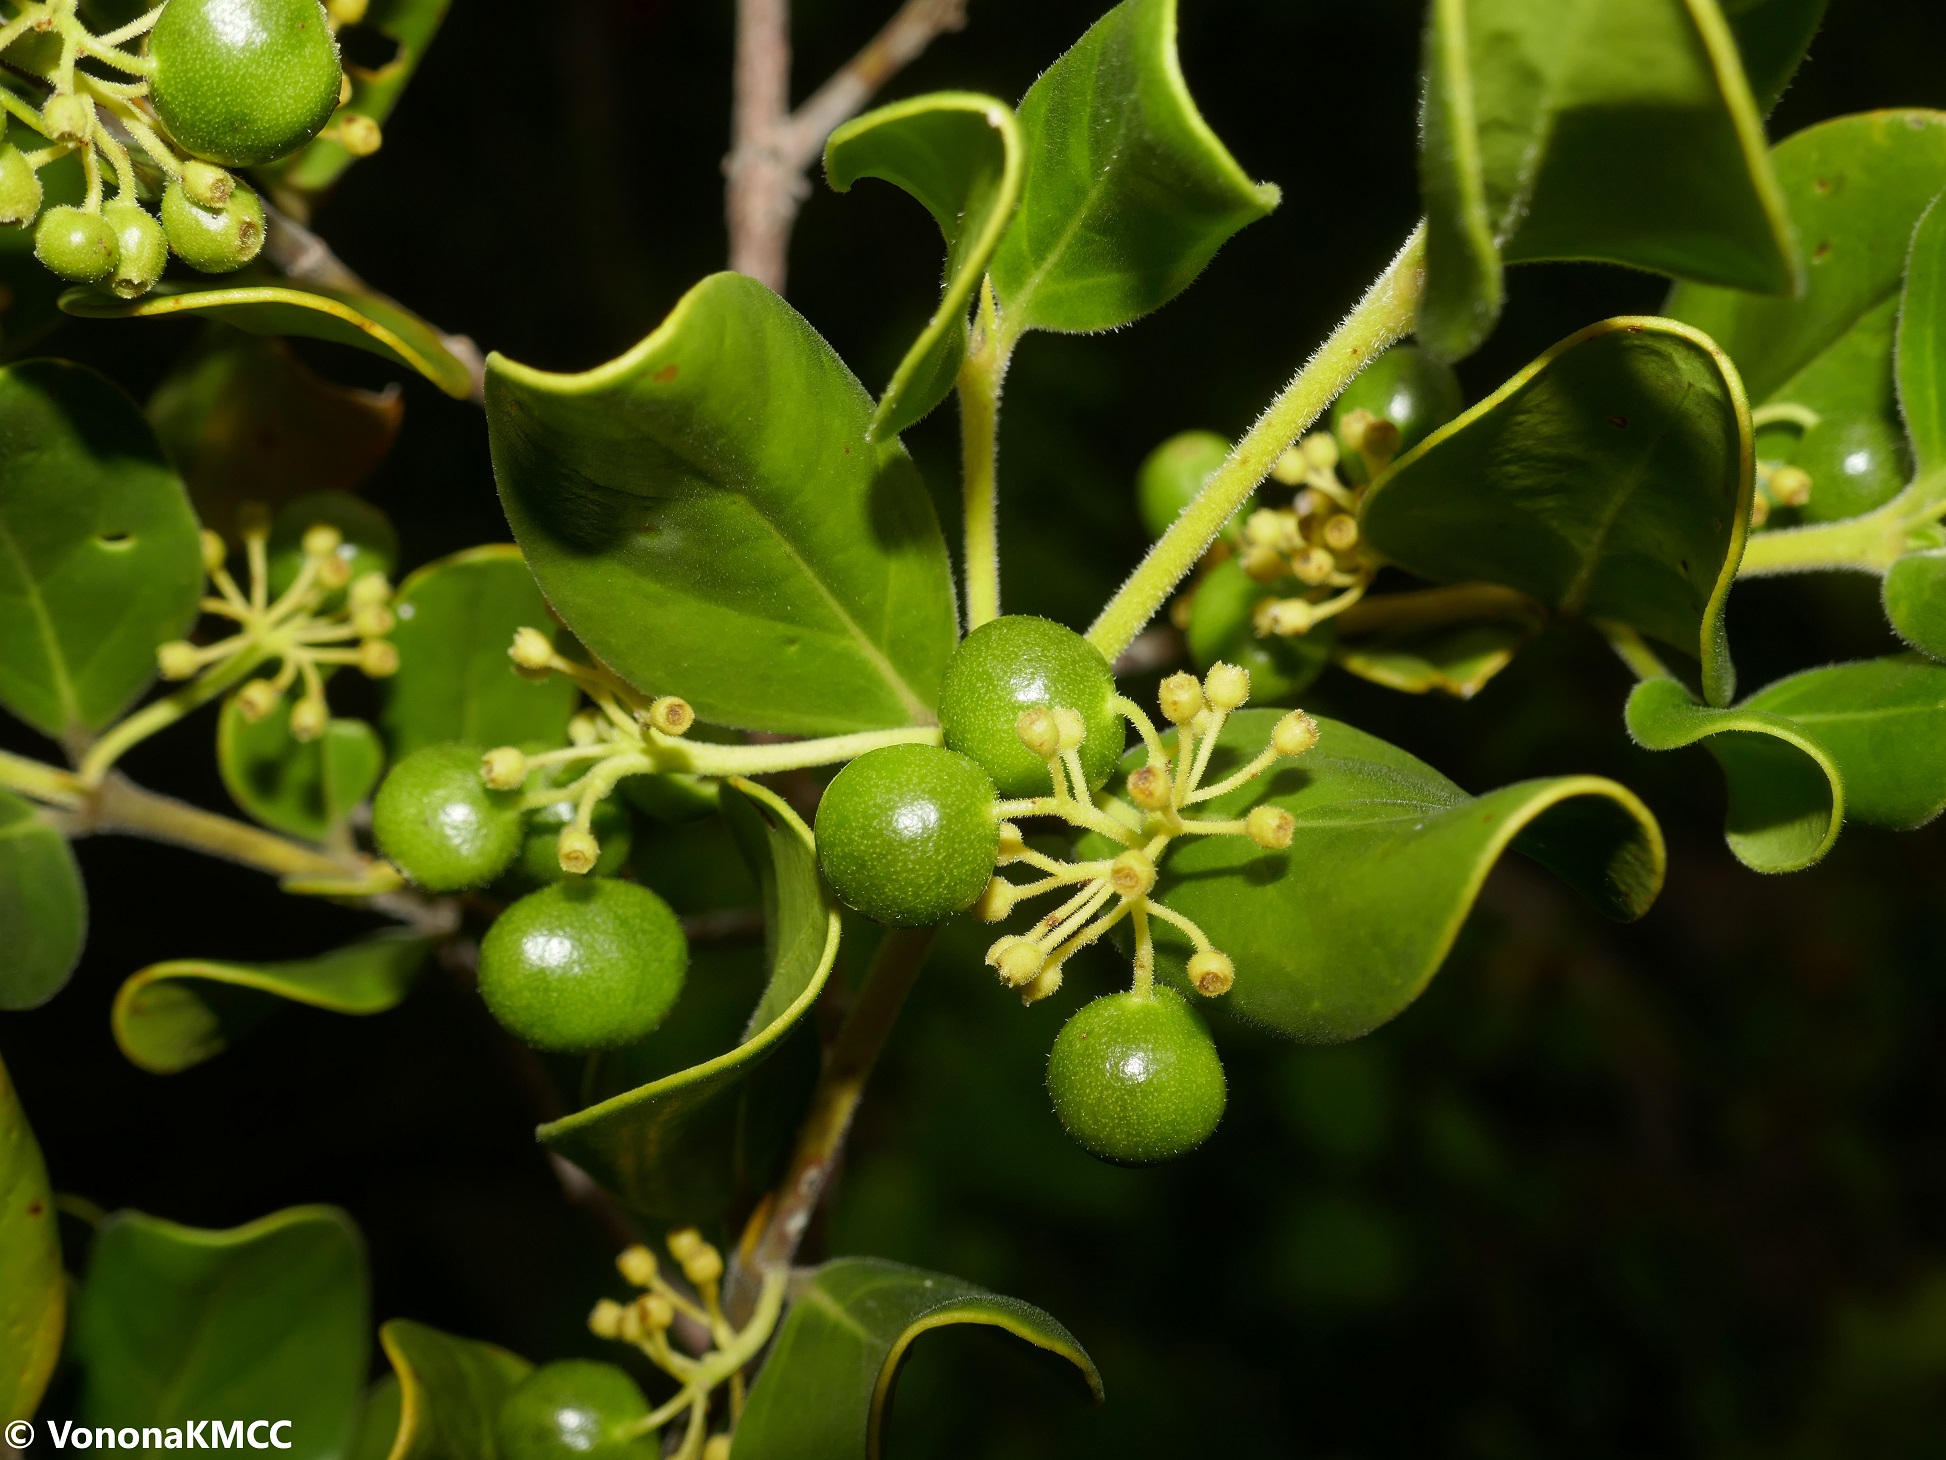 Leaves and small round green fruits of Psydrax sambiranesis